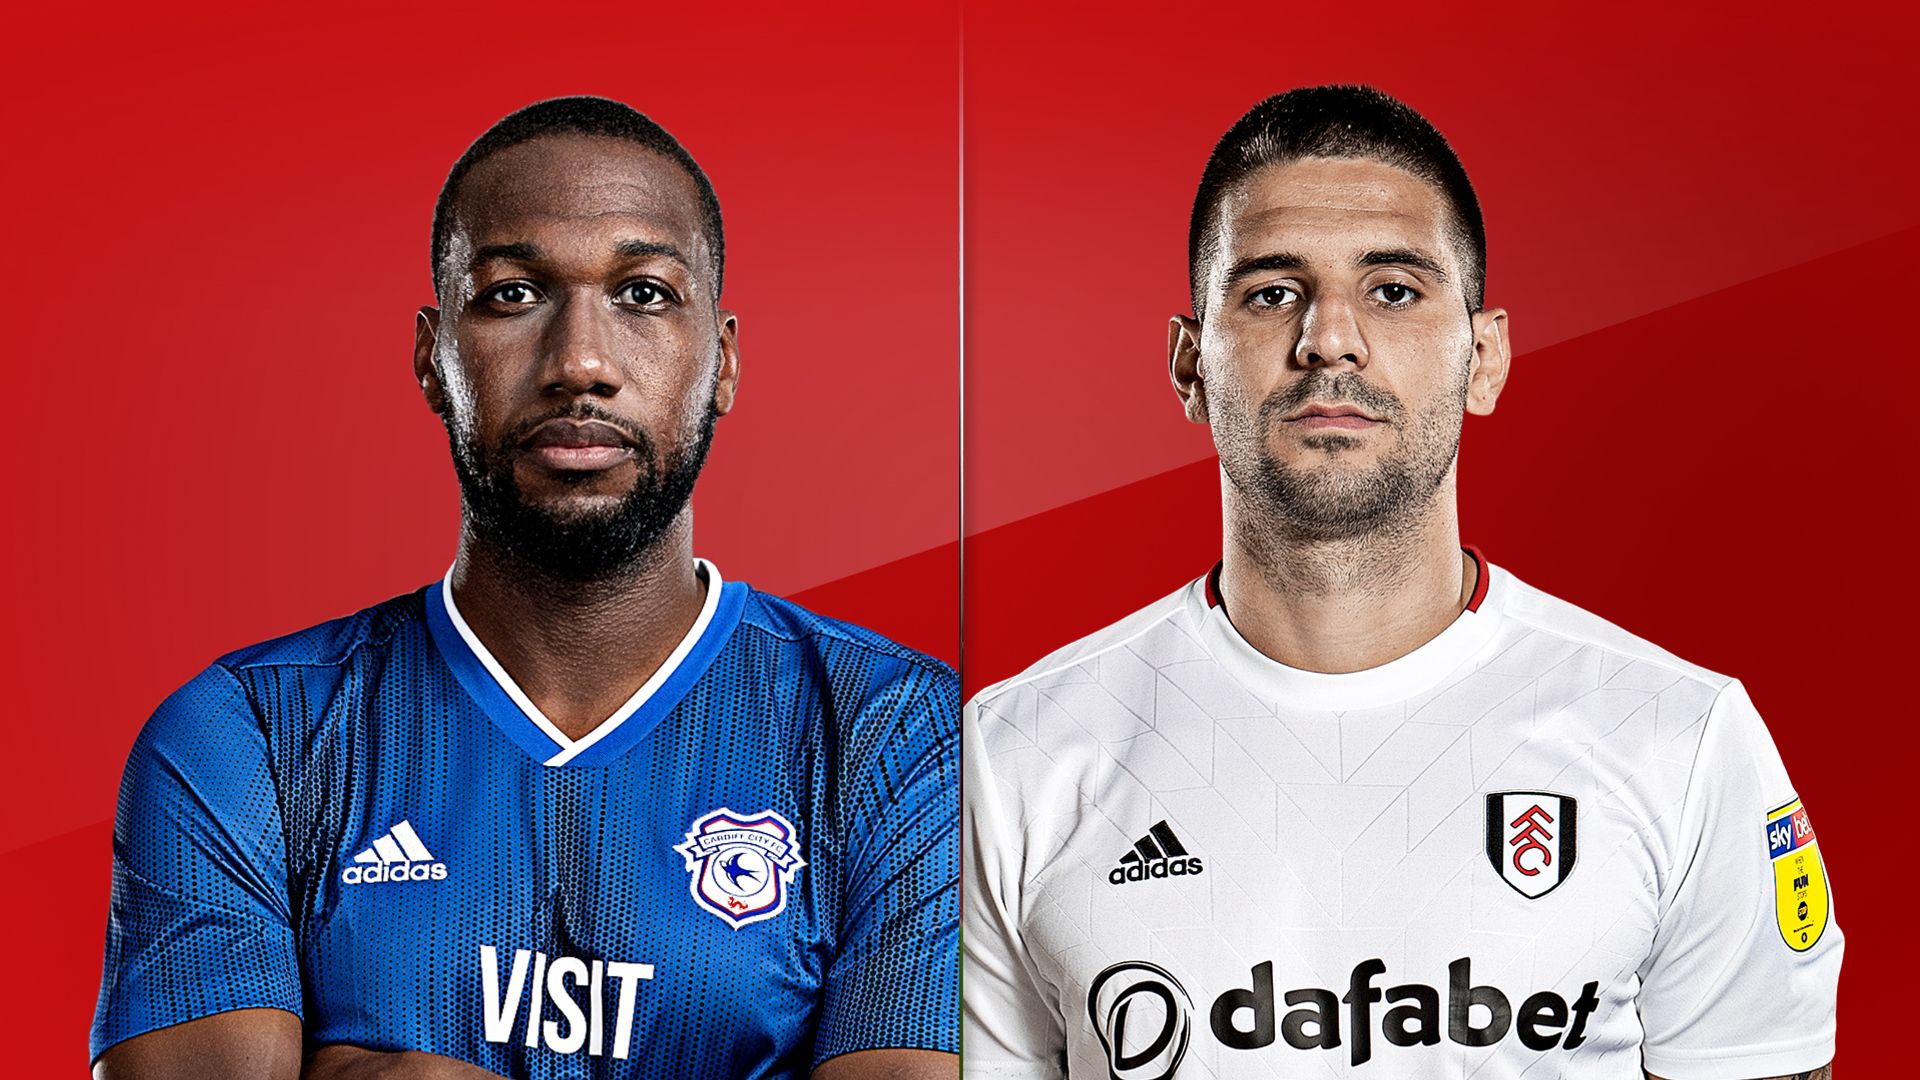 Live on Sky: Cardiff vs Fulham